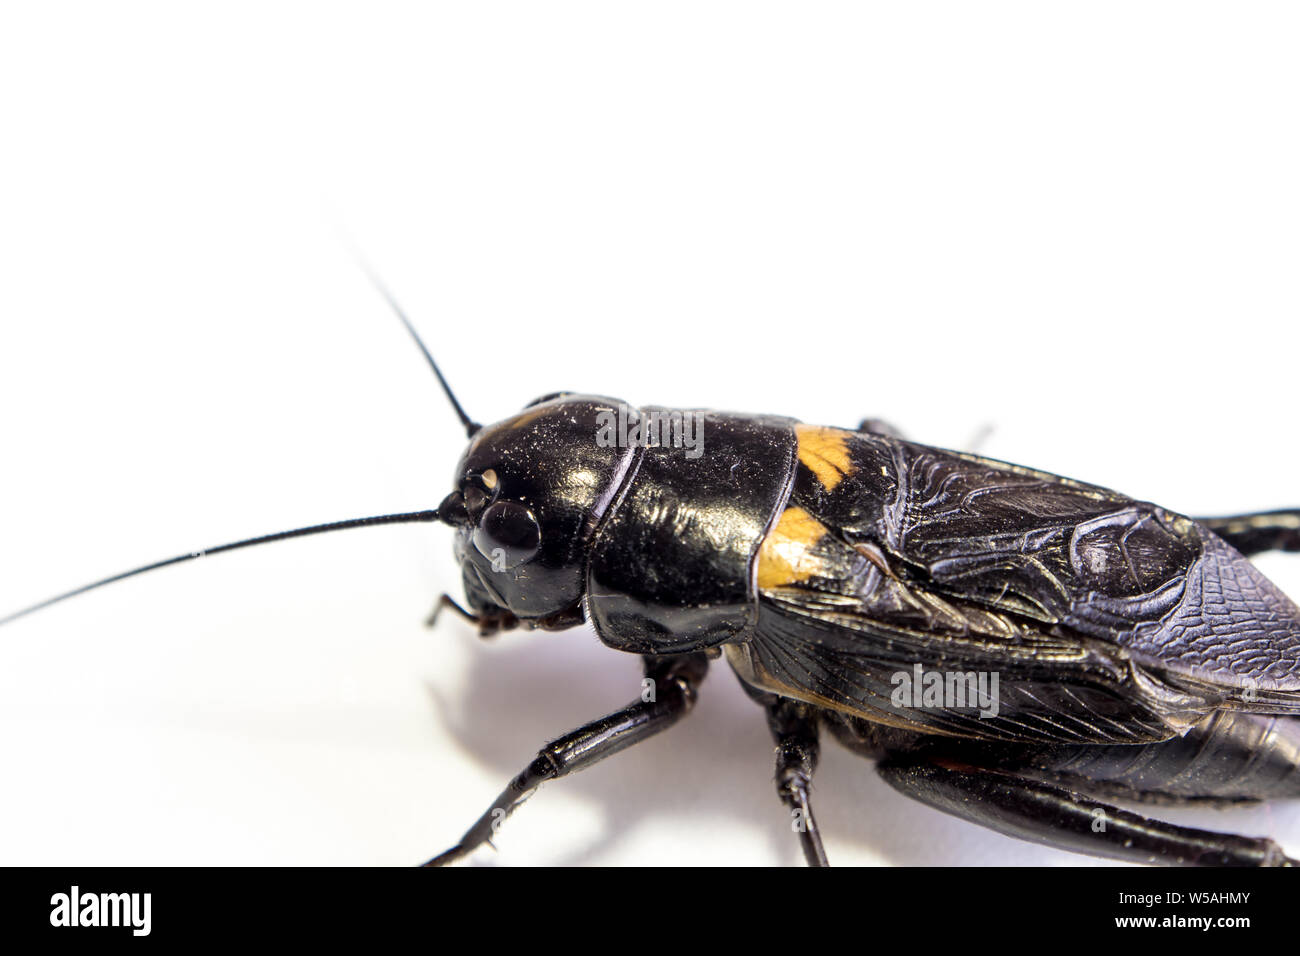 Common black cricket Gryllus bimaculatus degeer, isolated insect on white background Stock Photo